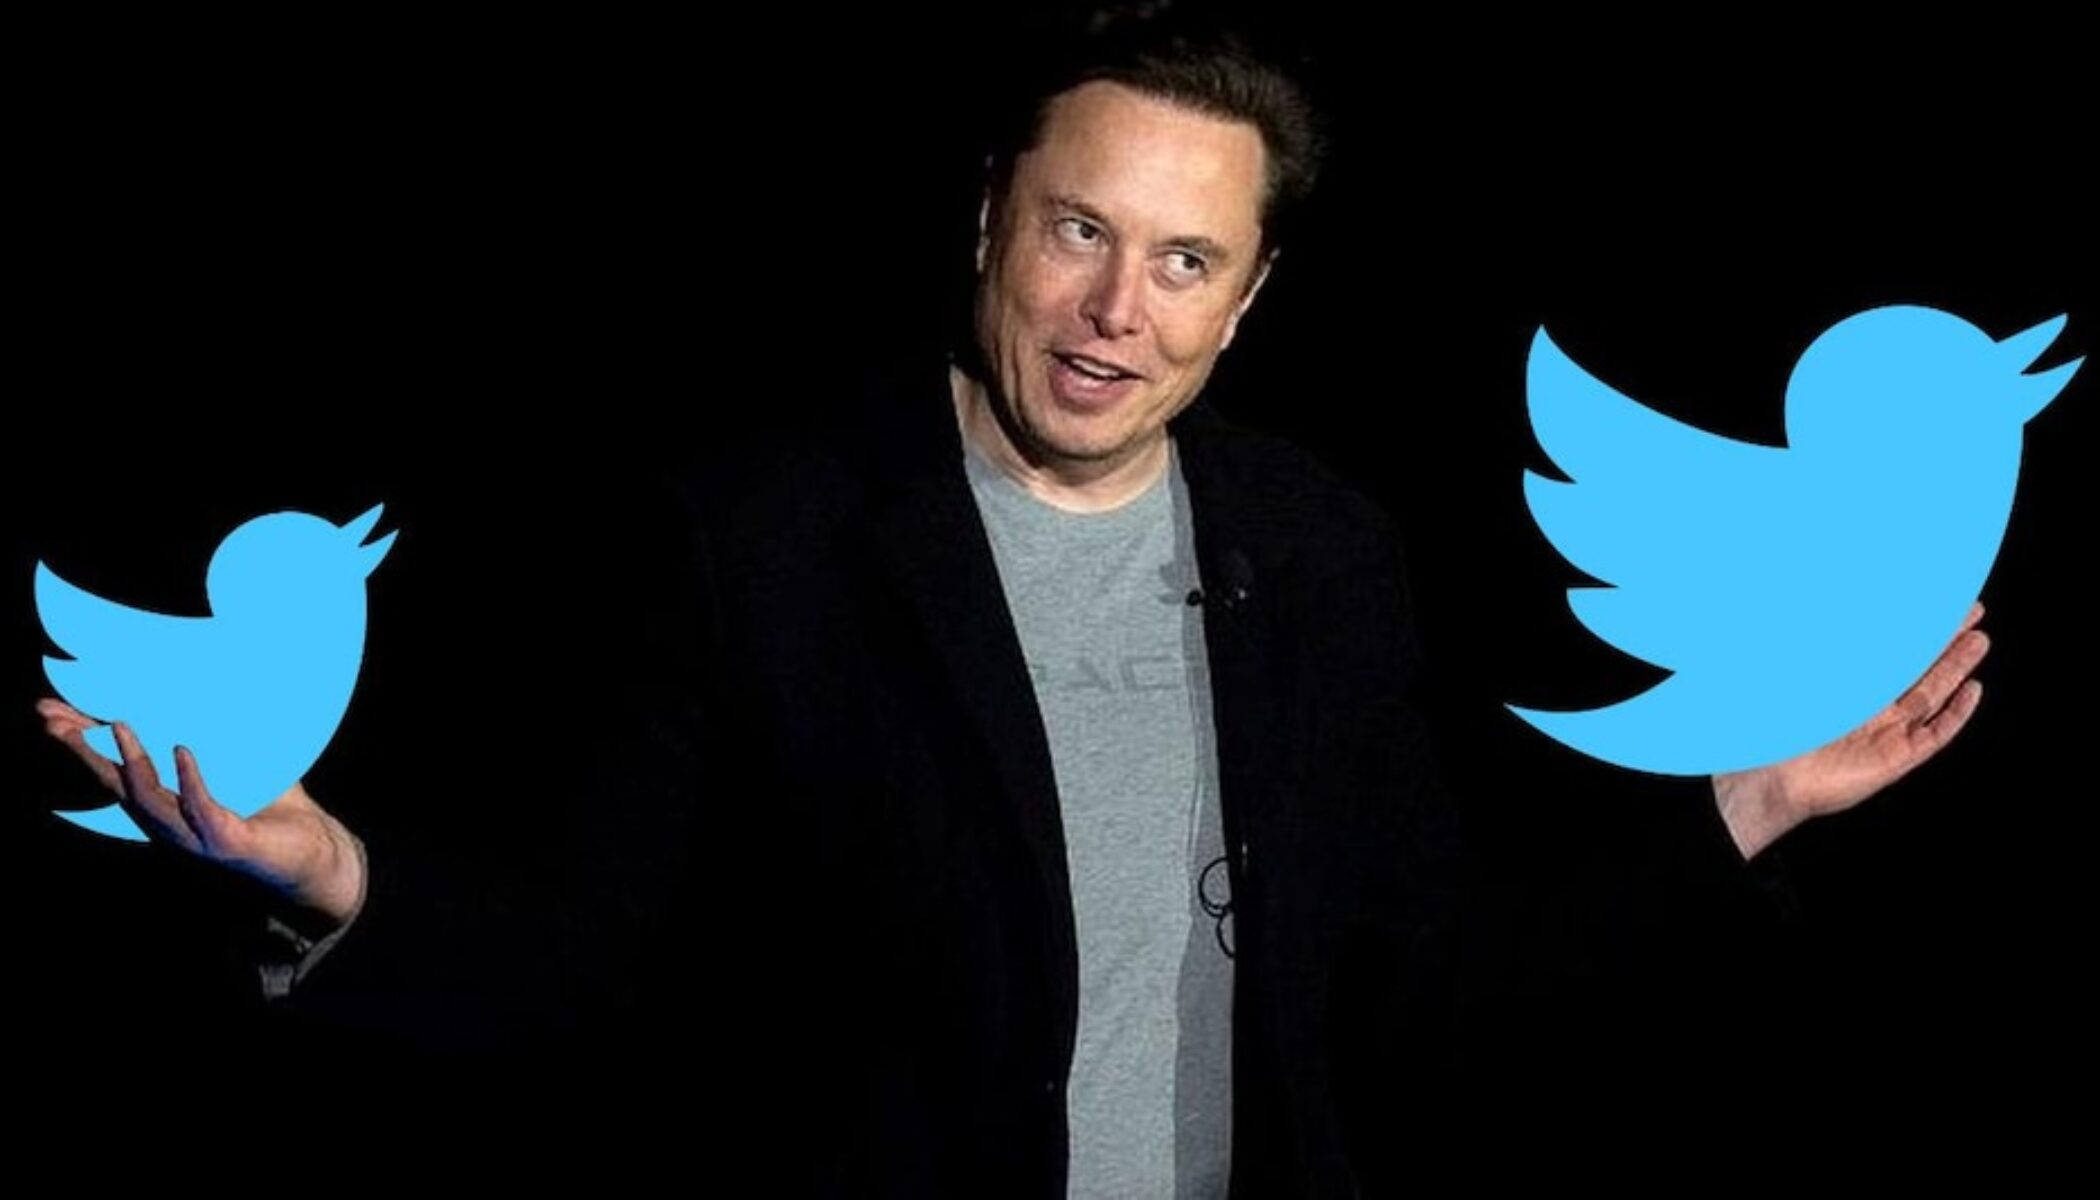 Twitter Elon Musk Promises To Give Performance Based Stock Awards